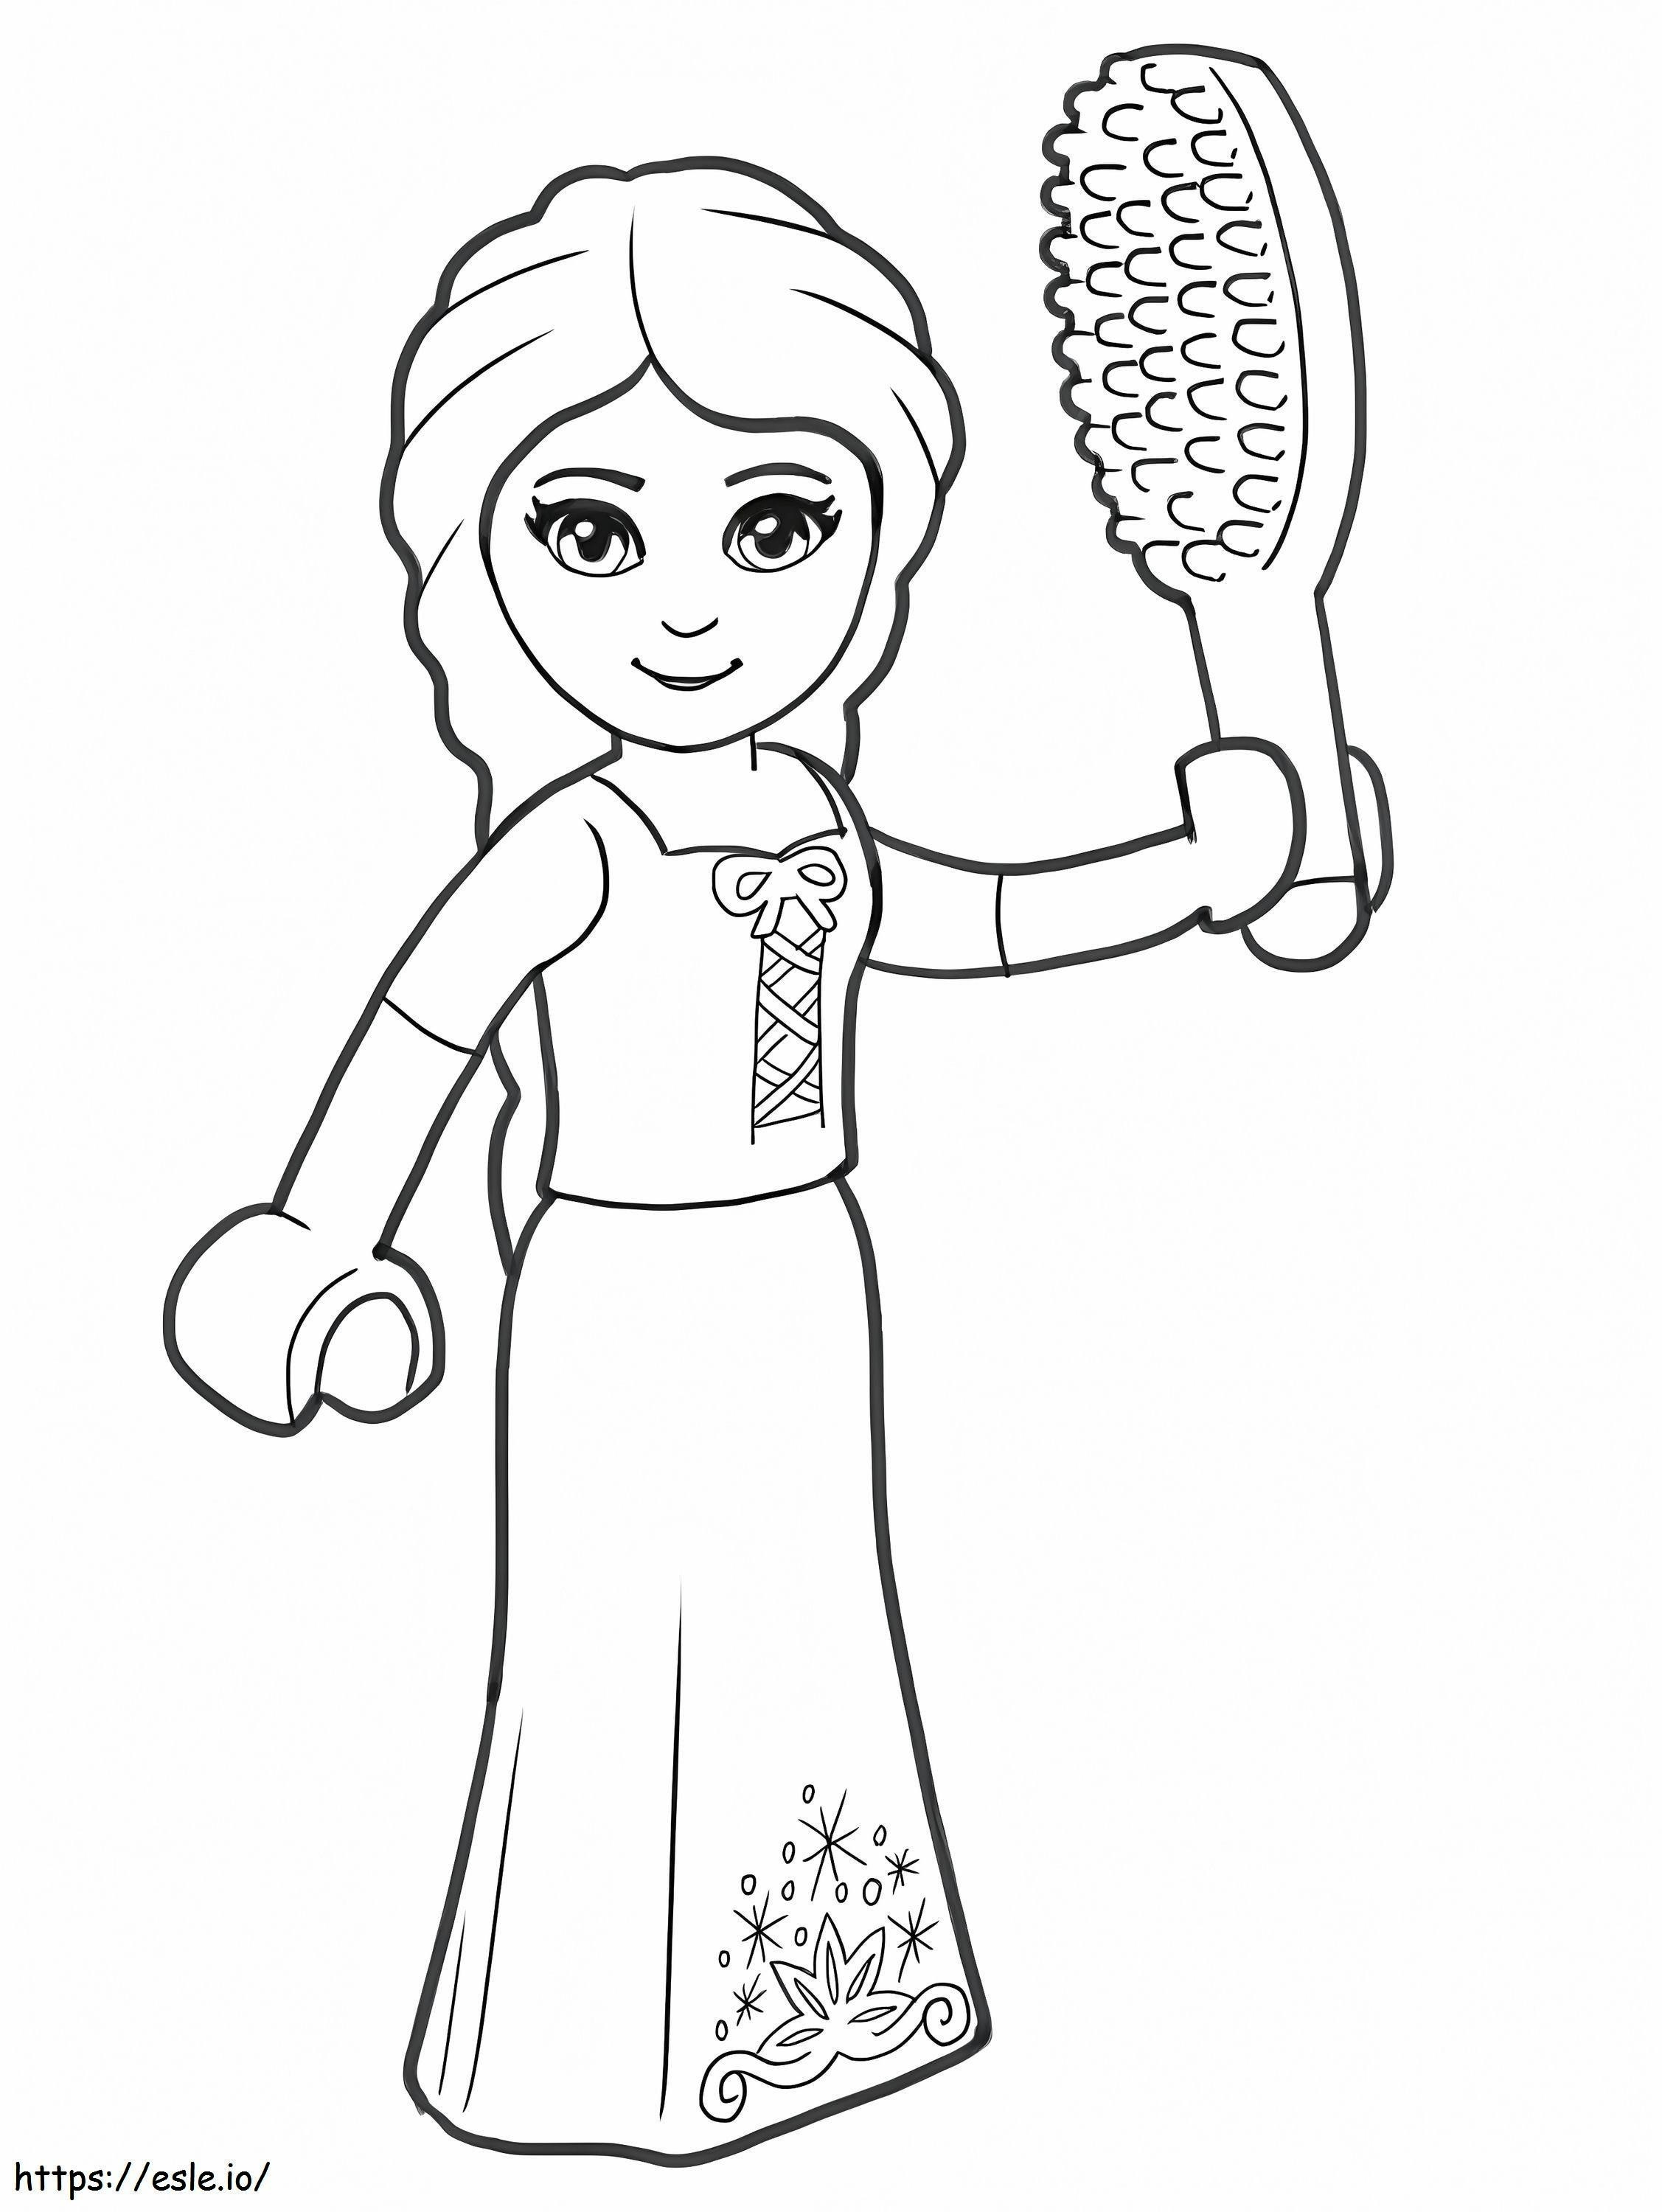 Lego Princess Elsa coloring page